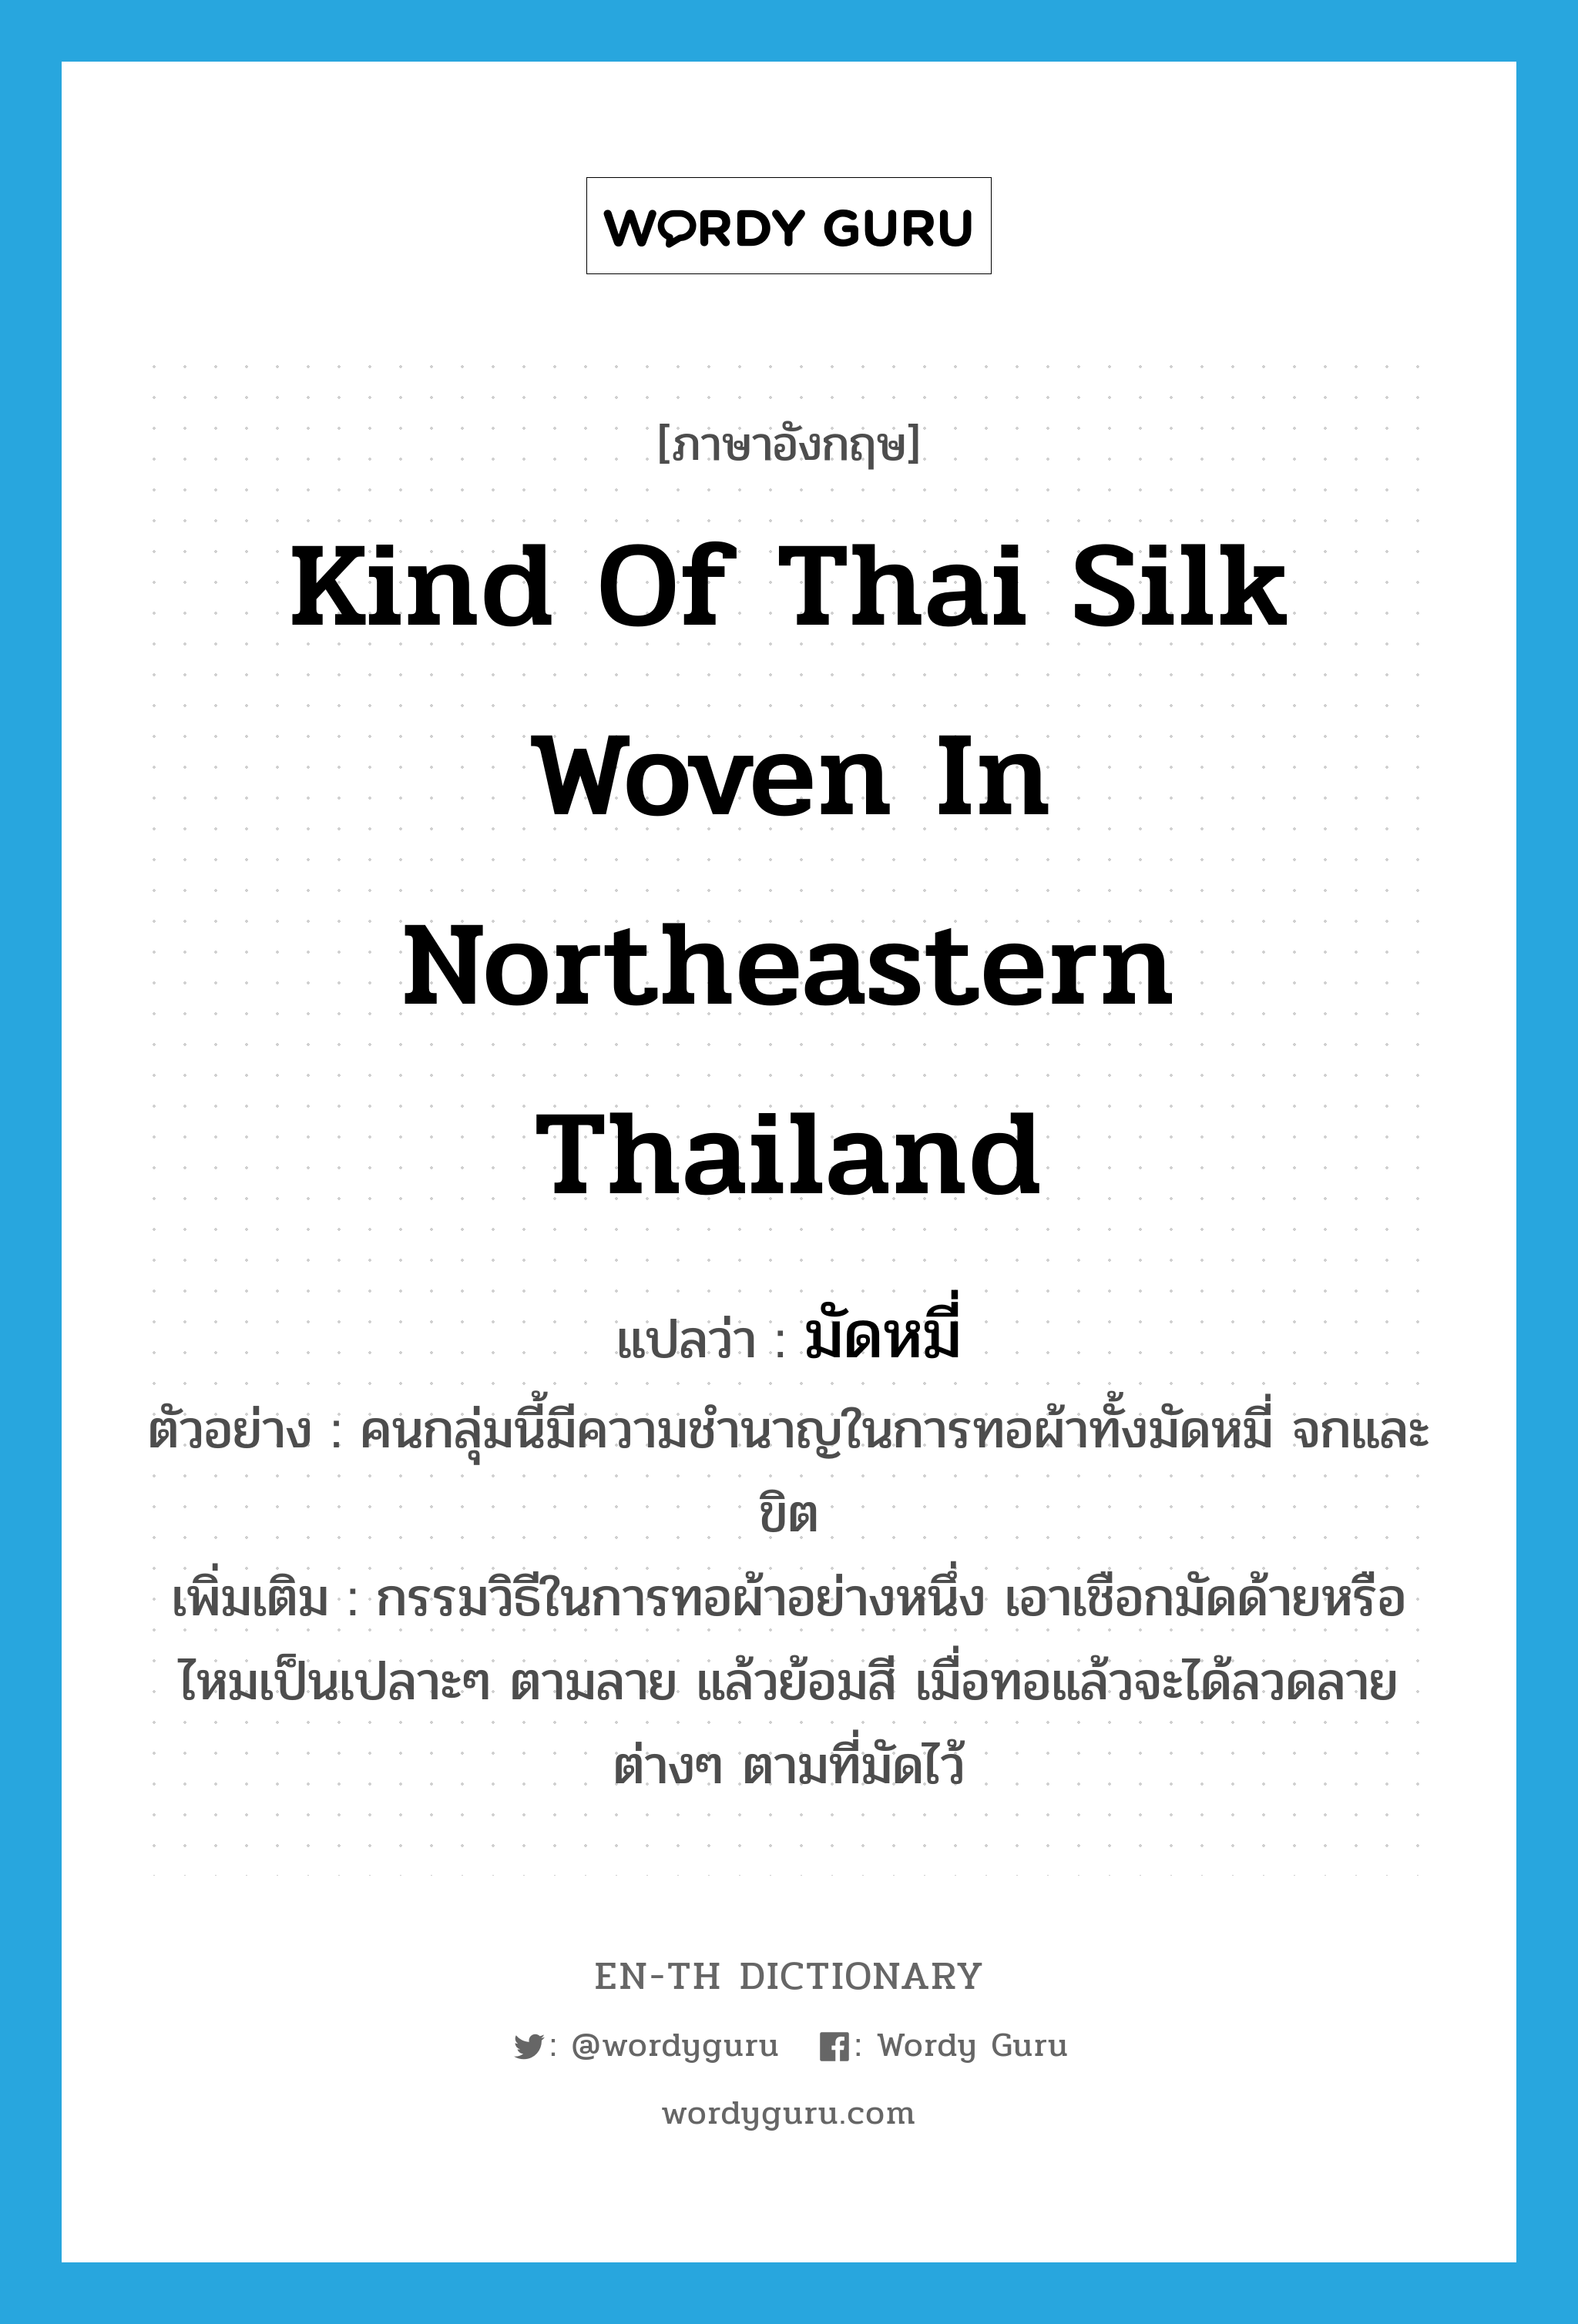 kind of Thai silk woven in northeastern Thailand แปลว่า?, คำศัพท์ภาษาอังกฤษ kind of Thai silk woven in northeastern Thailand แปลว่า มัดหมี่ ประเภท N ตัวอย่าง คนกลุ่มนี้มีความชำนาญในการทอผ้าทั้งมัดหมี่ จกและขิต เพิ่มเติม กรรมวิธีในการทอผ้าอย่างหนึ่ง เอาเชือกมัดด้ายหรือไหมเป็นเปลาะๆ ตามลาย แล้วย้อมสี เมื่อทอแล้วจะได้ลวดลายต่างๆ ตามที่มัดไว้ หมวด N